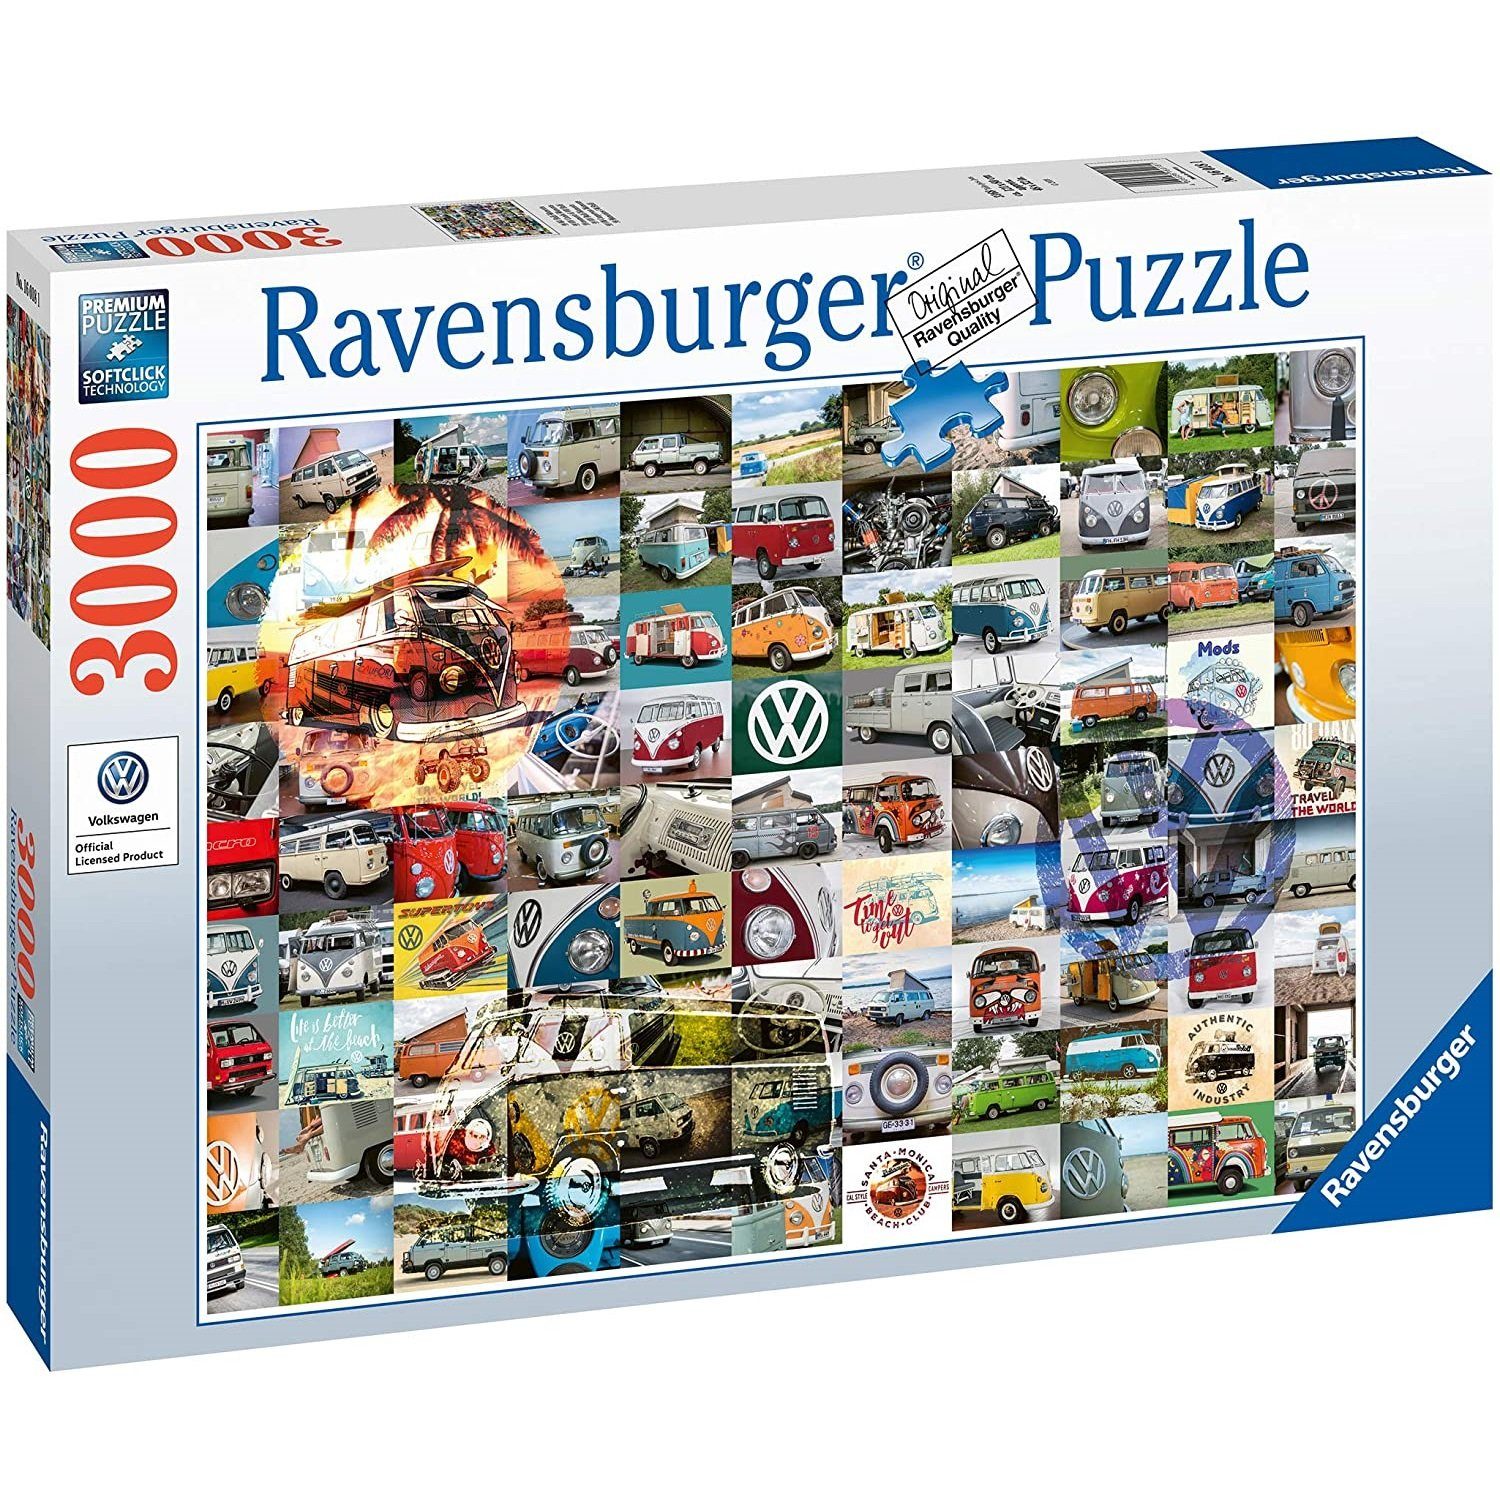 Ravensburger Puzzle Ravensburger - Bulli Puzzleteile 3000 VW Moments, 99 3000 Teile